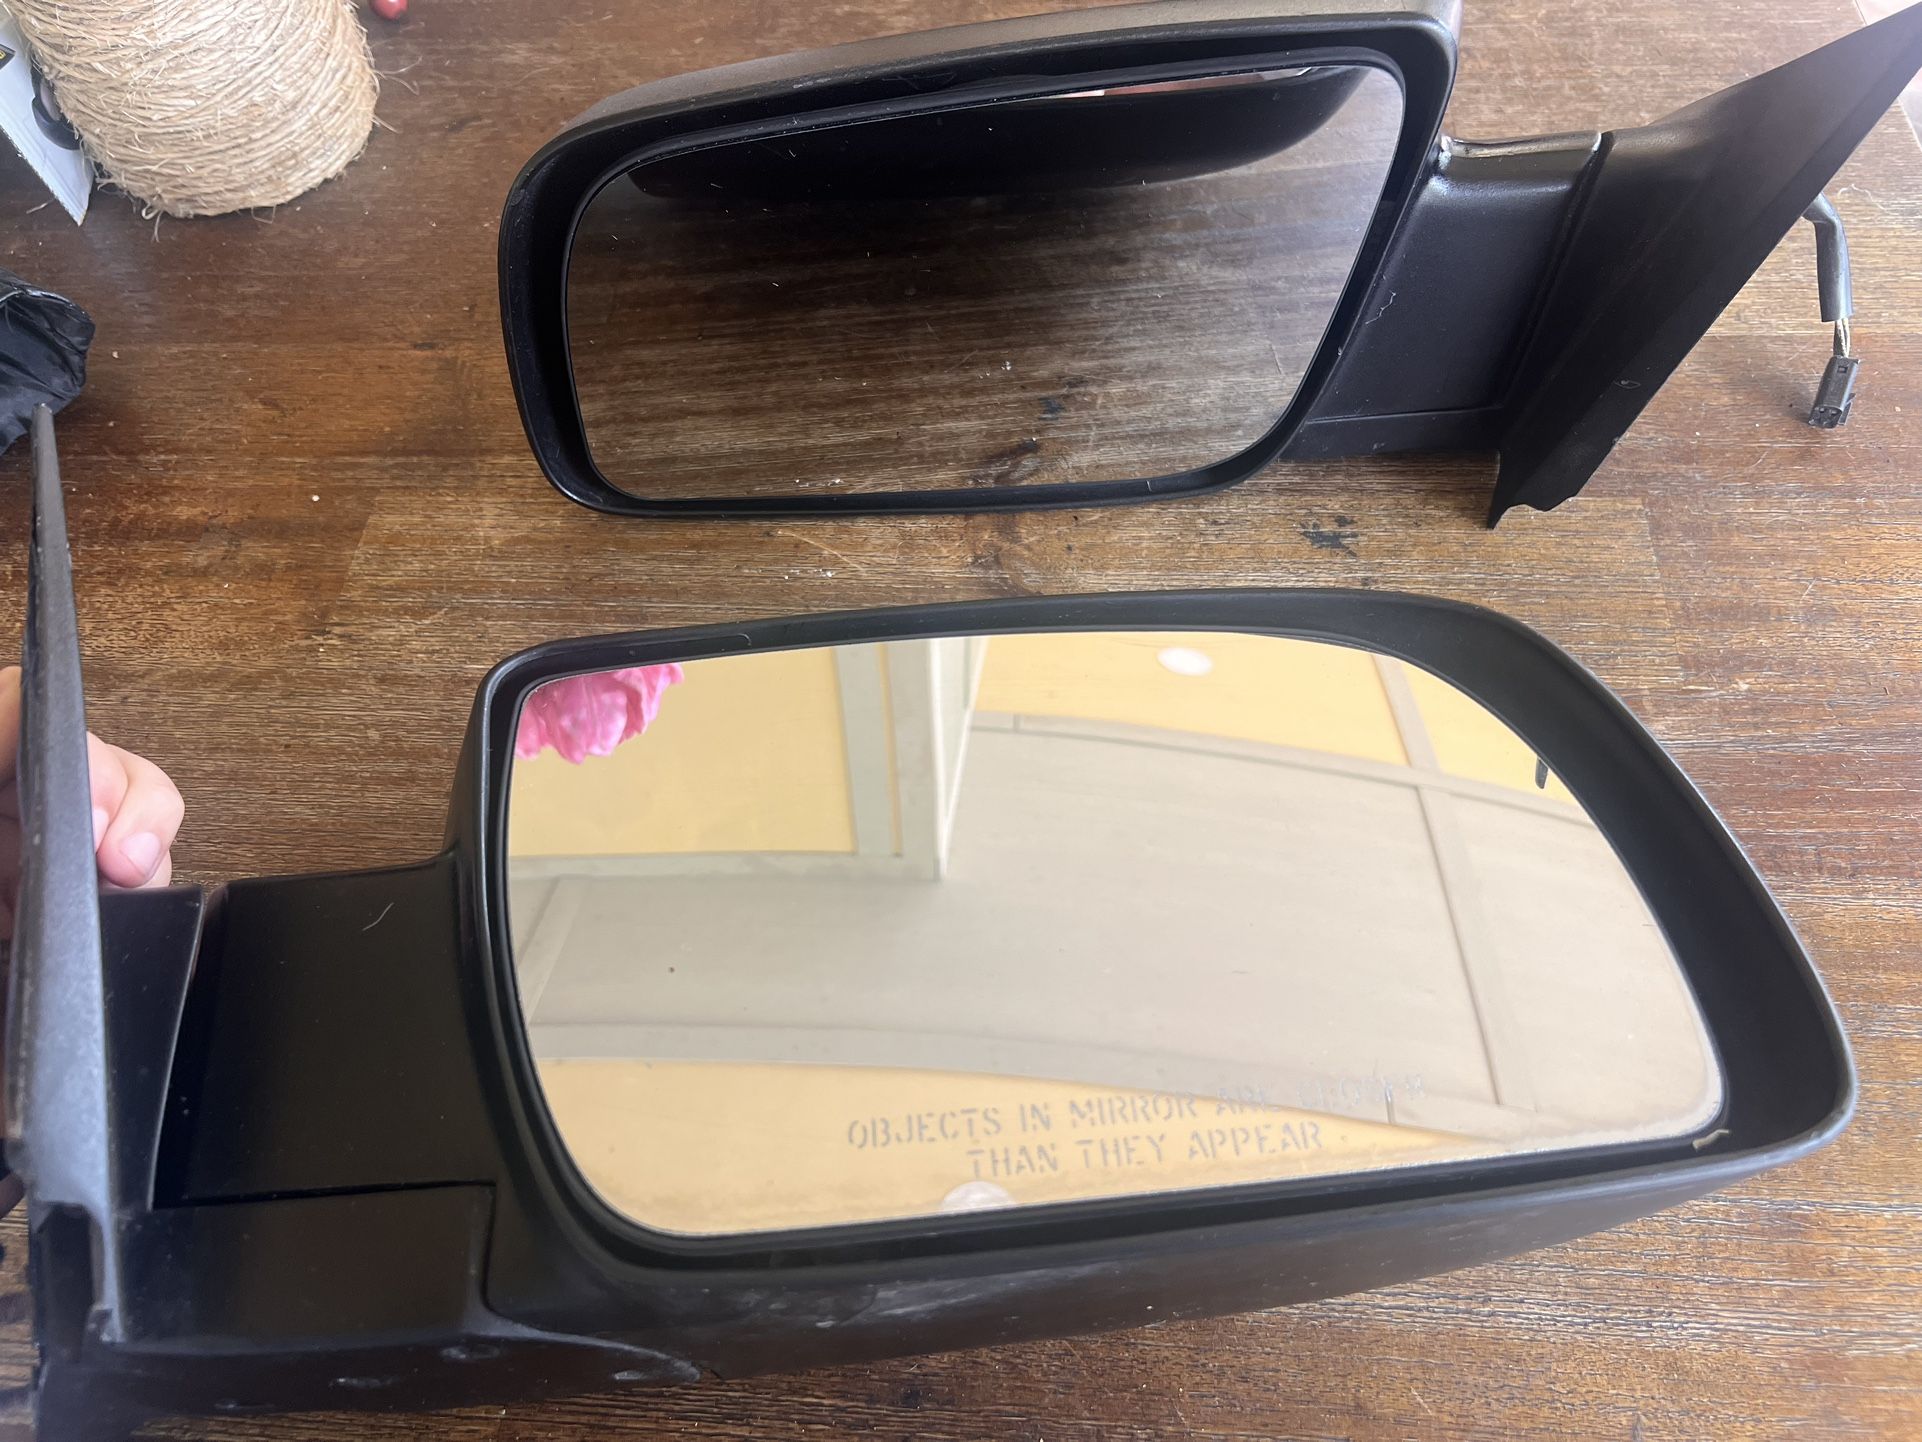 96 GMC Suburban rearview mirrors